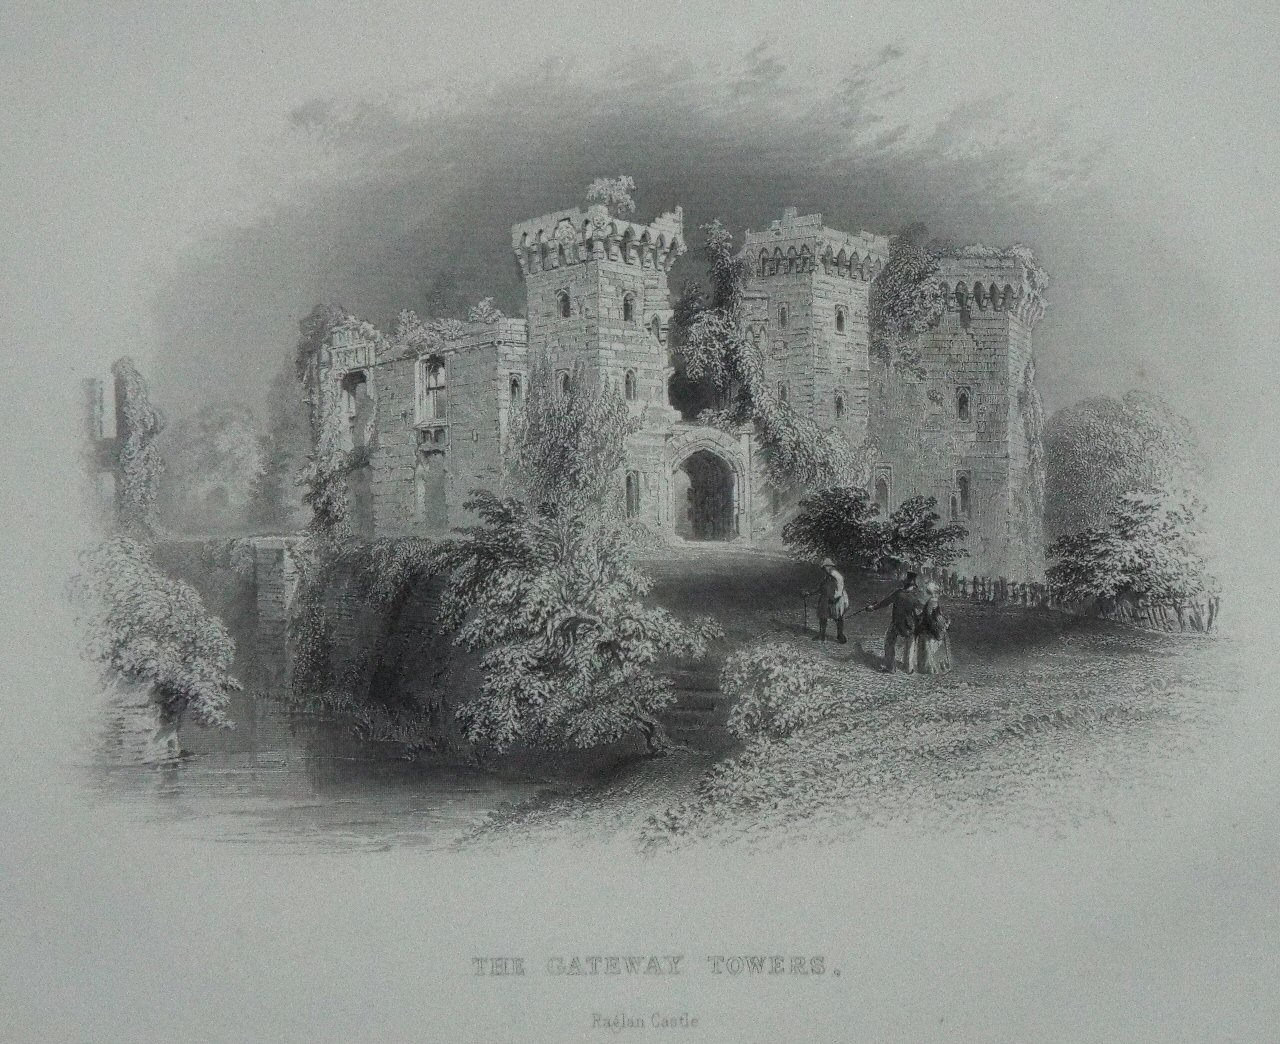 Steel Vignette - The Gateway Towers, Raglan Castle